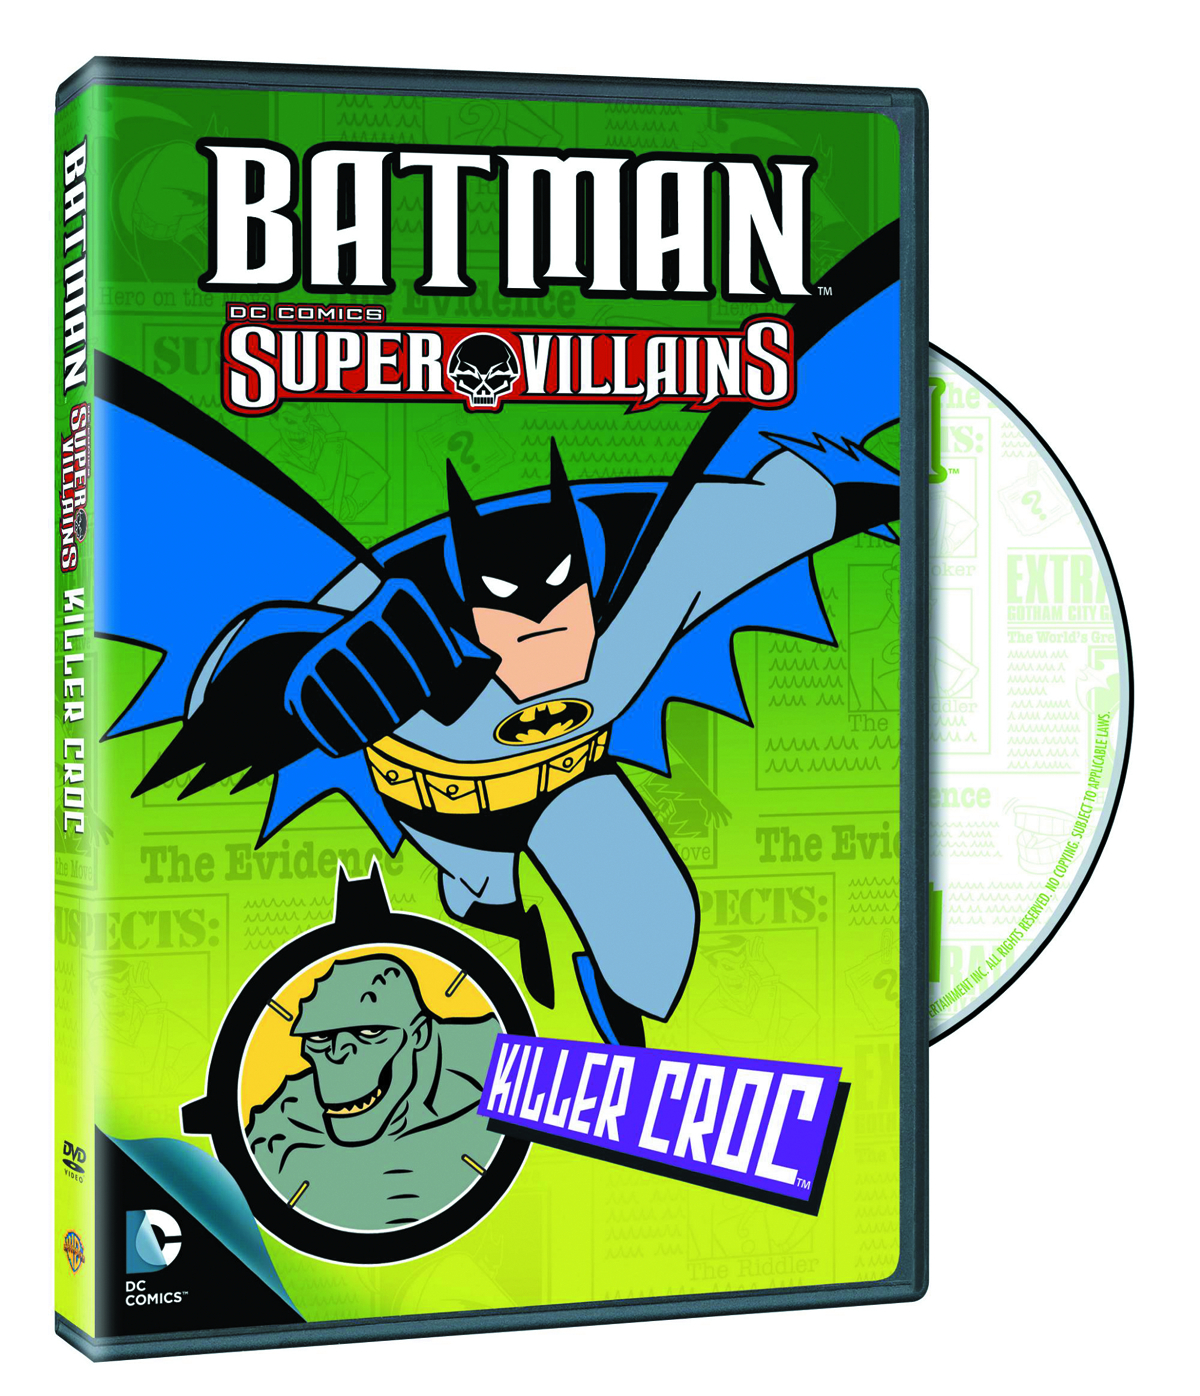 BATMAN SUPER VILLAINS KILLER CROC DVD